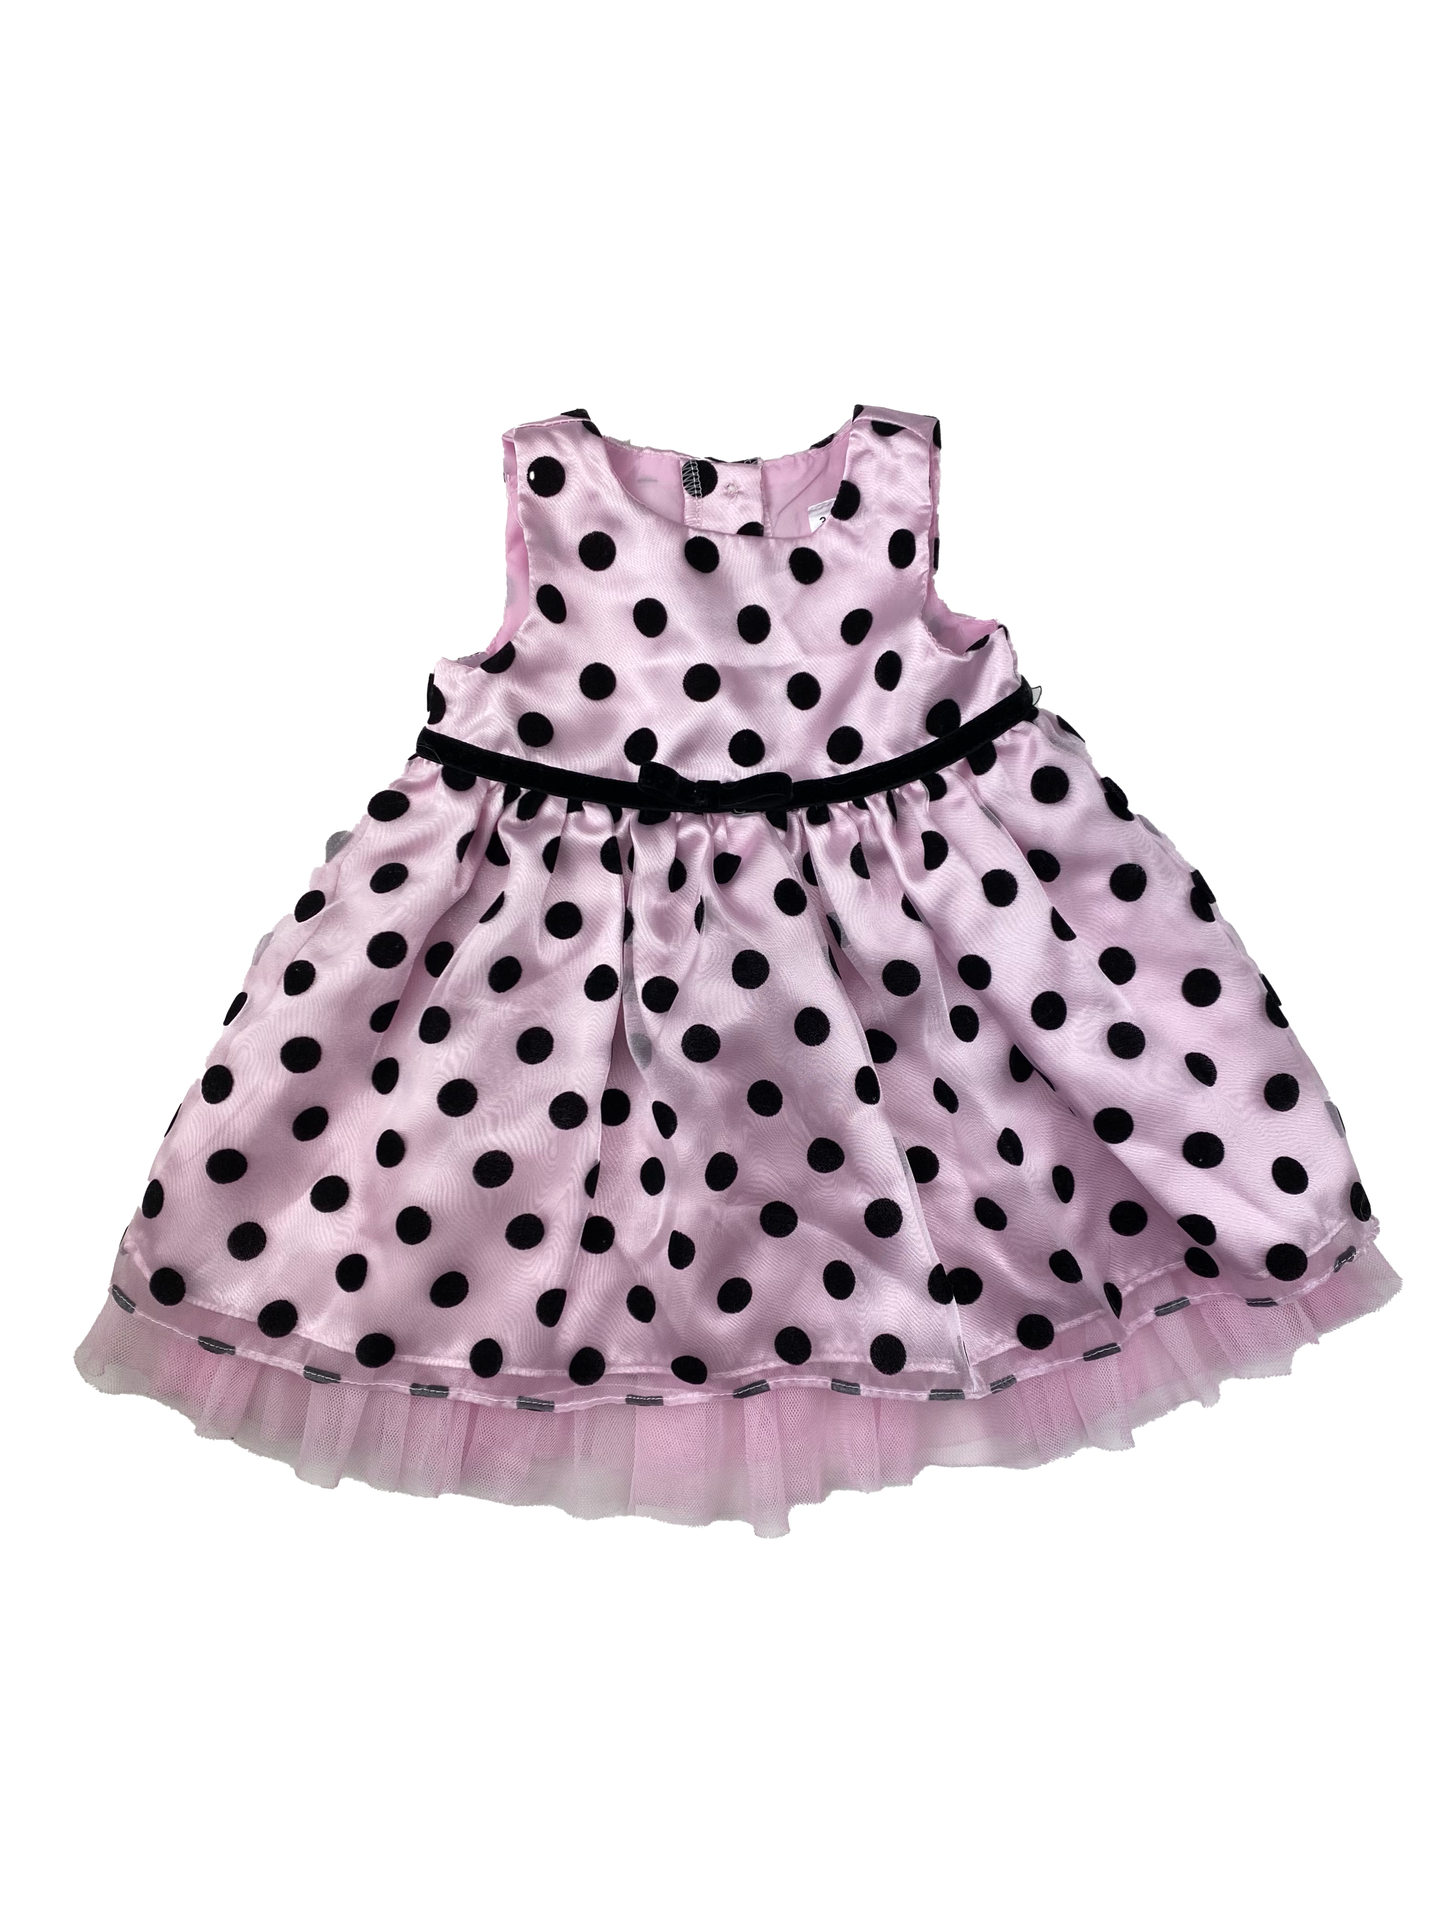 George Pink Satin Dress with Black Polka Dots 3-6M